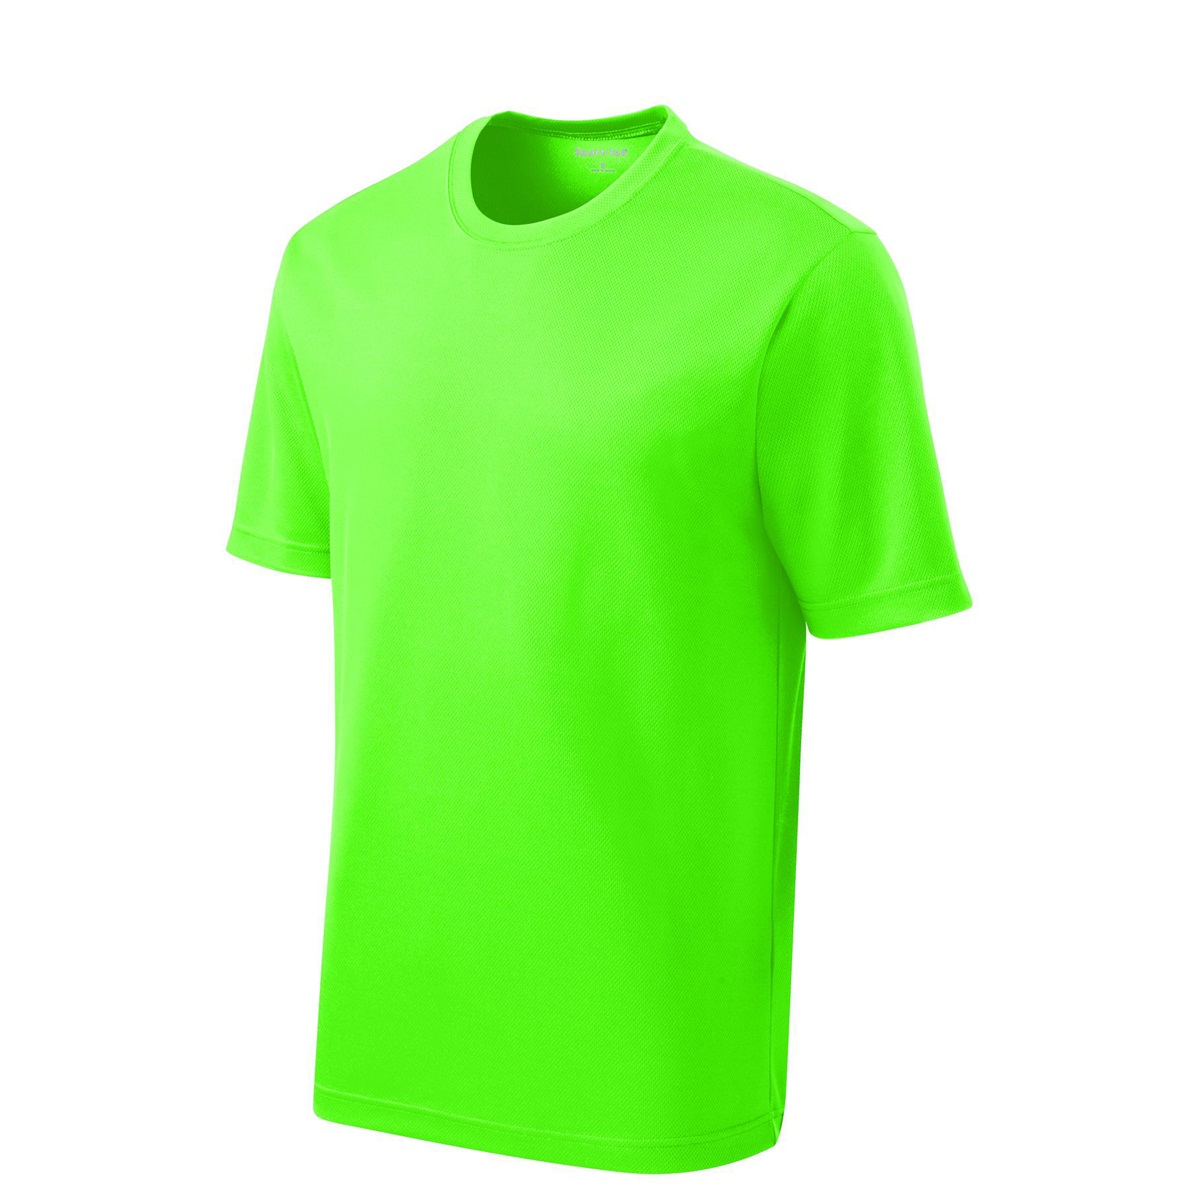 bright green nike shirt